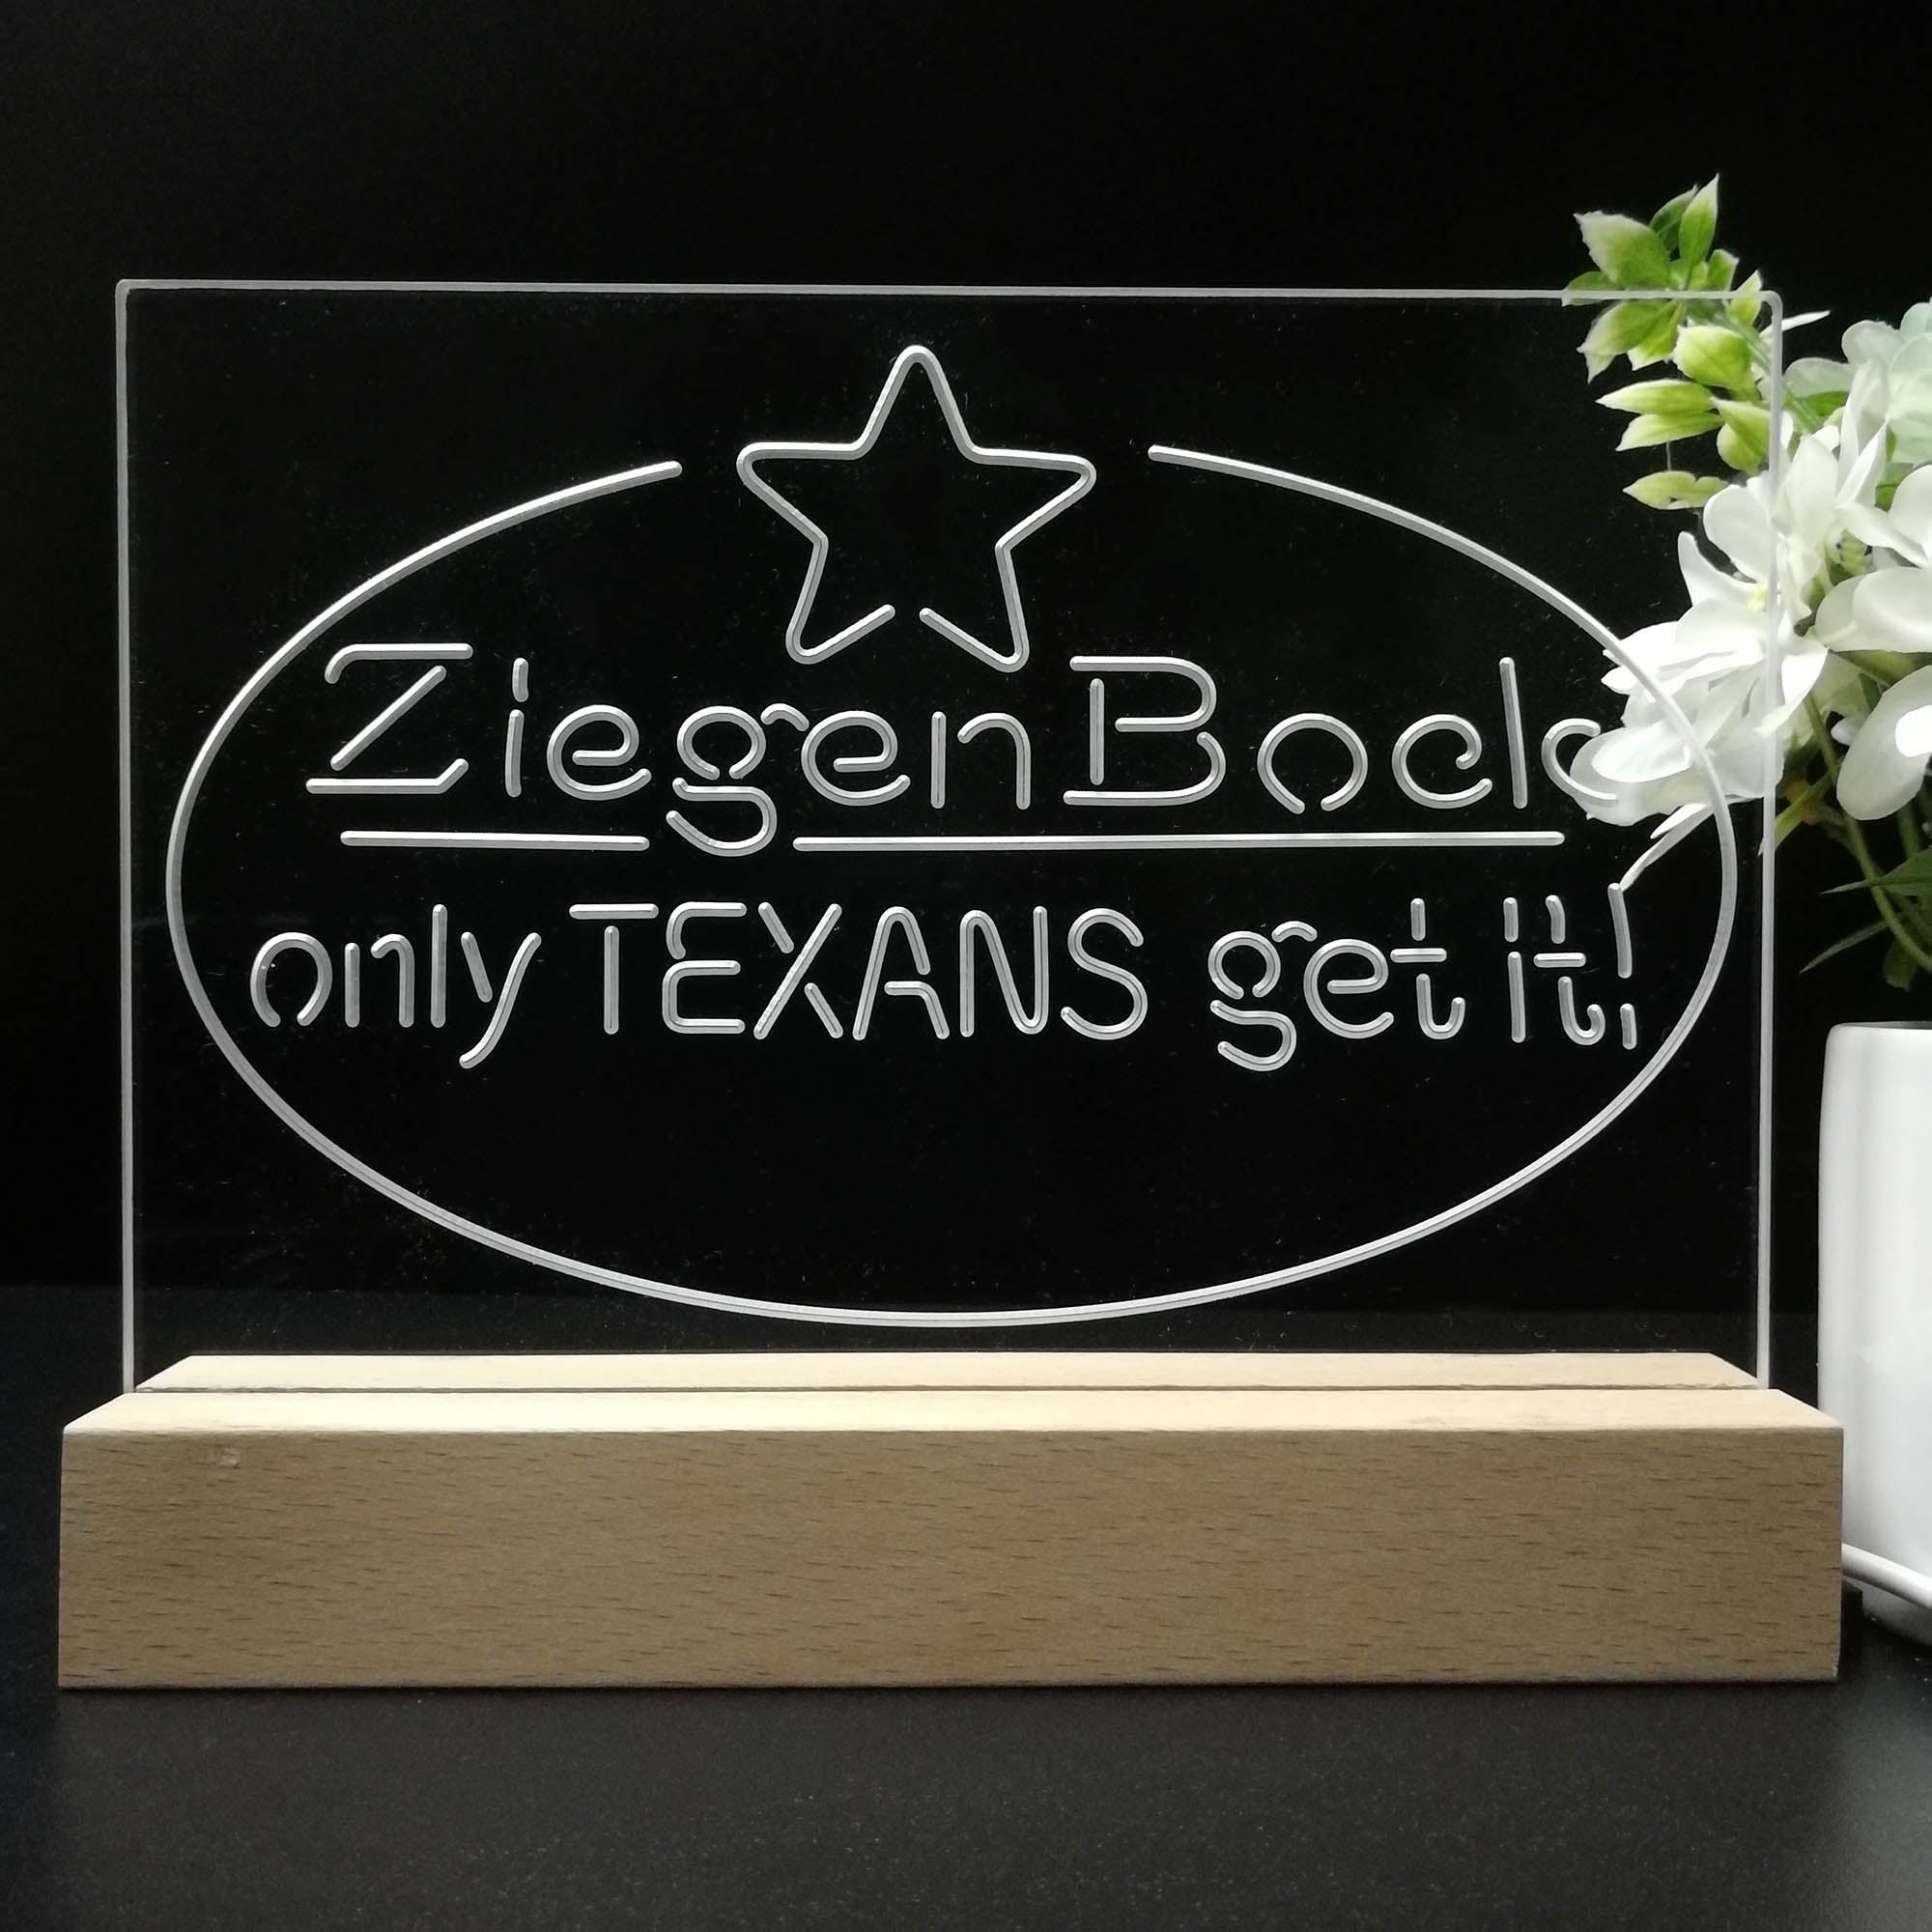 ZiegenBock Amber Only Texans Get it Neon Sign Pub Bar Lamp